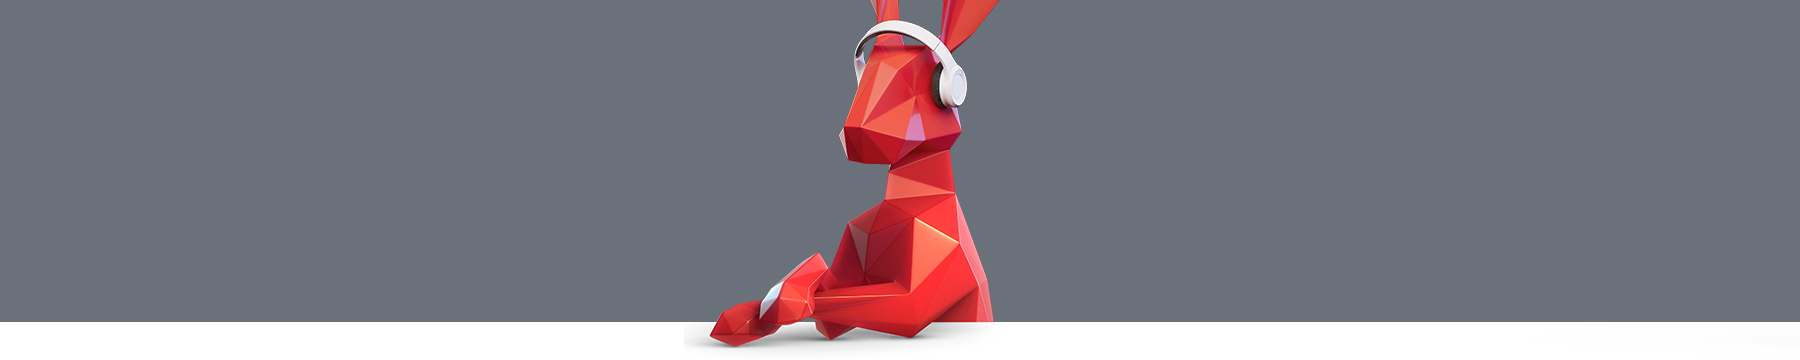 Red hare wearing headphones